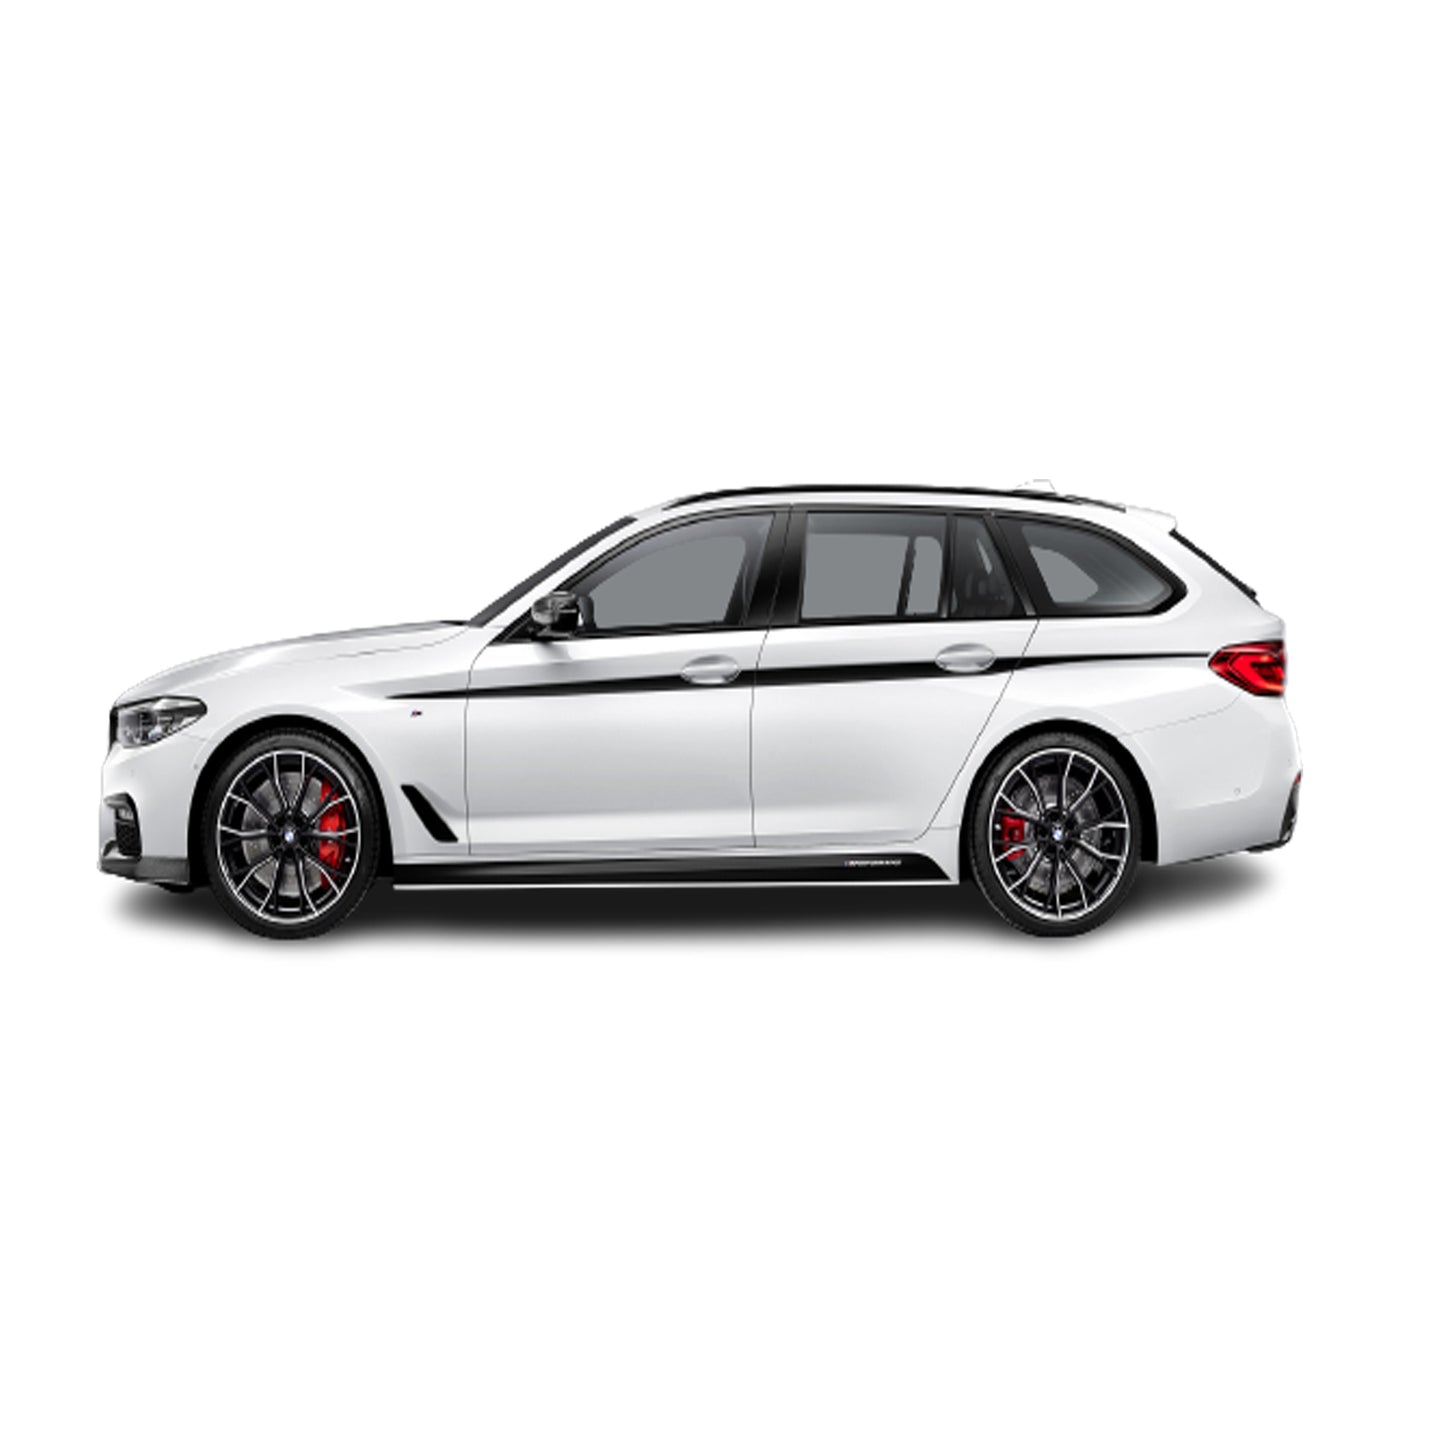 BMW 5 Series G31 Touring Full body kit Performance Style Package - BMW Body Kits Performance Styling